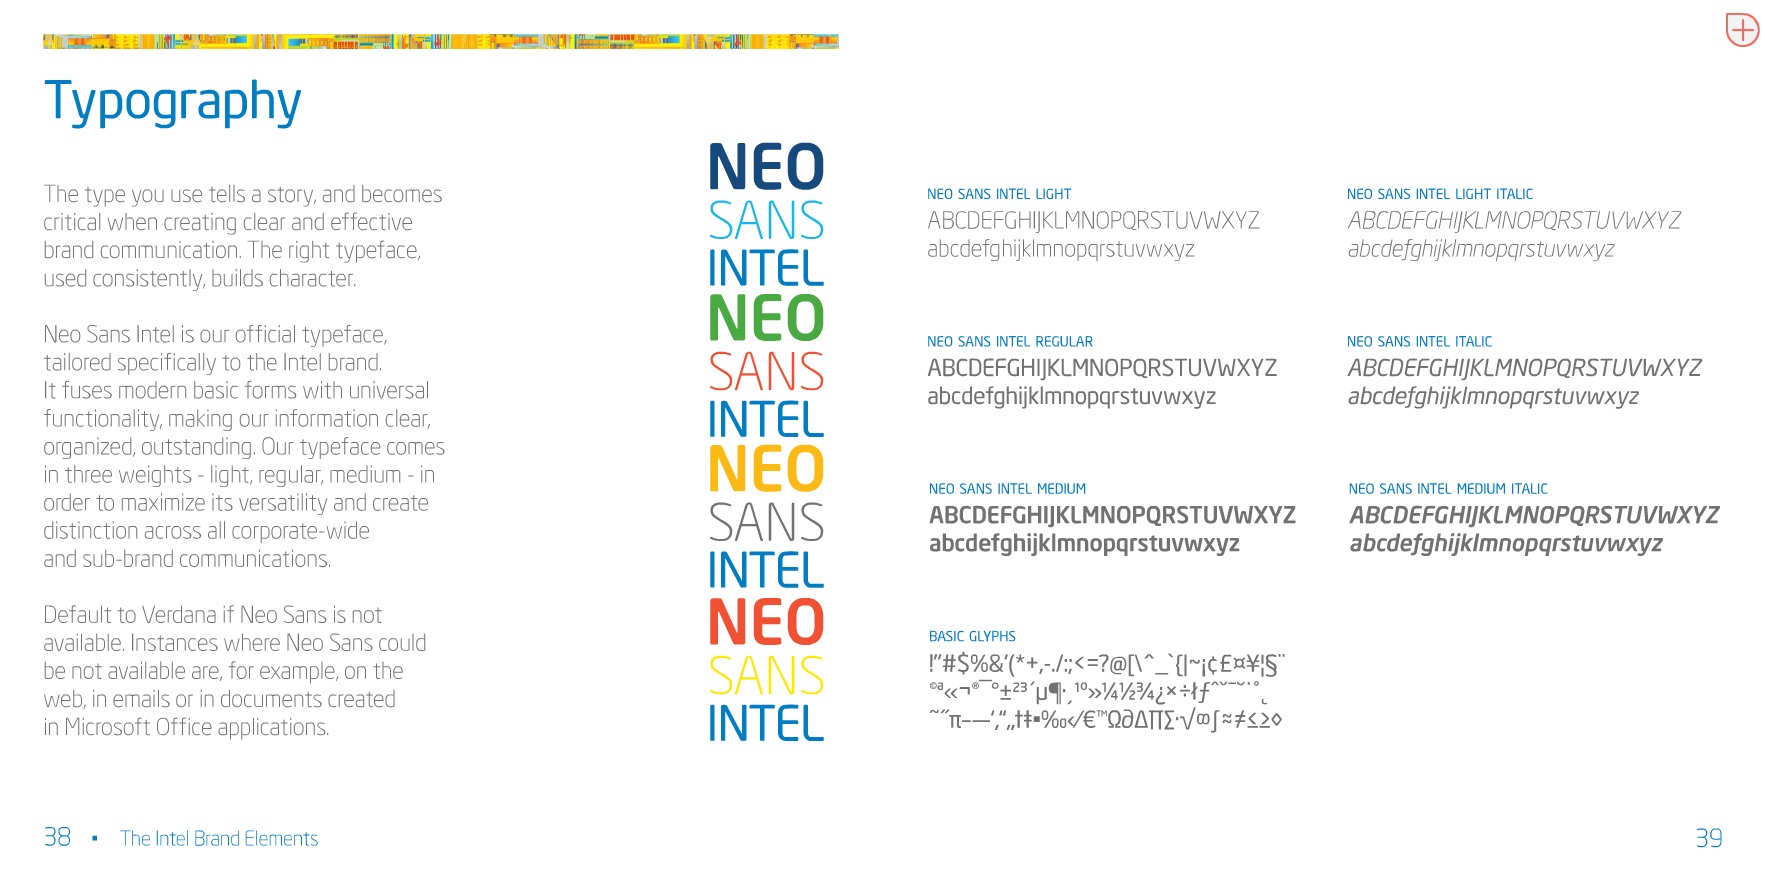 Neo Sans Intel. Neo Sans шрифт. Intel Italic. Бренд стандарт RАL 387. Neo sans